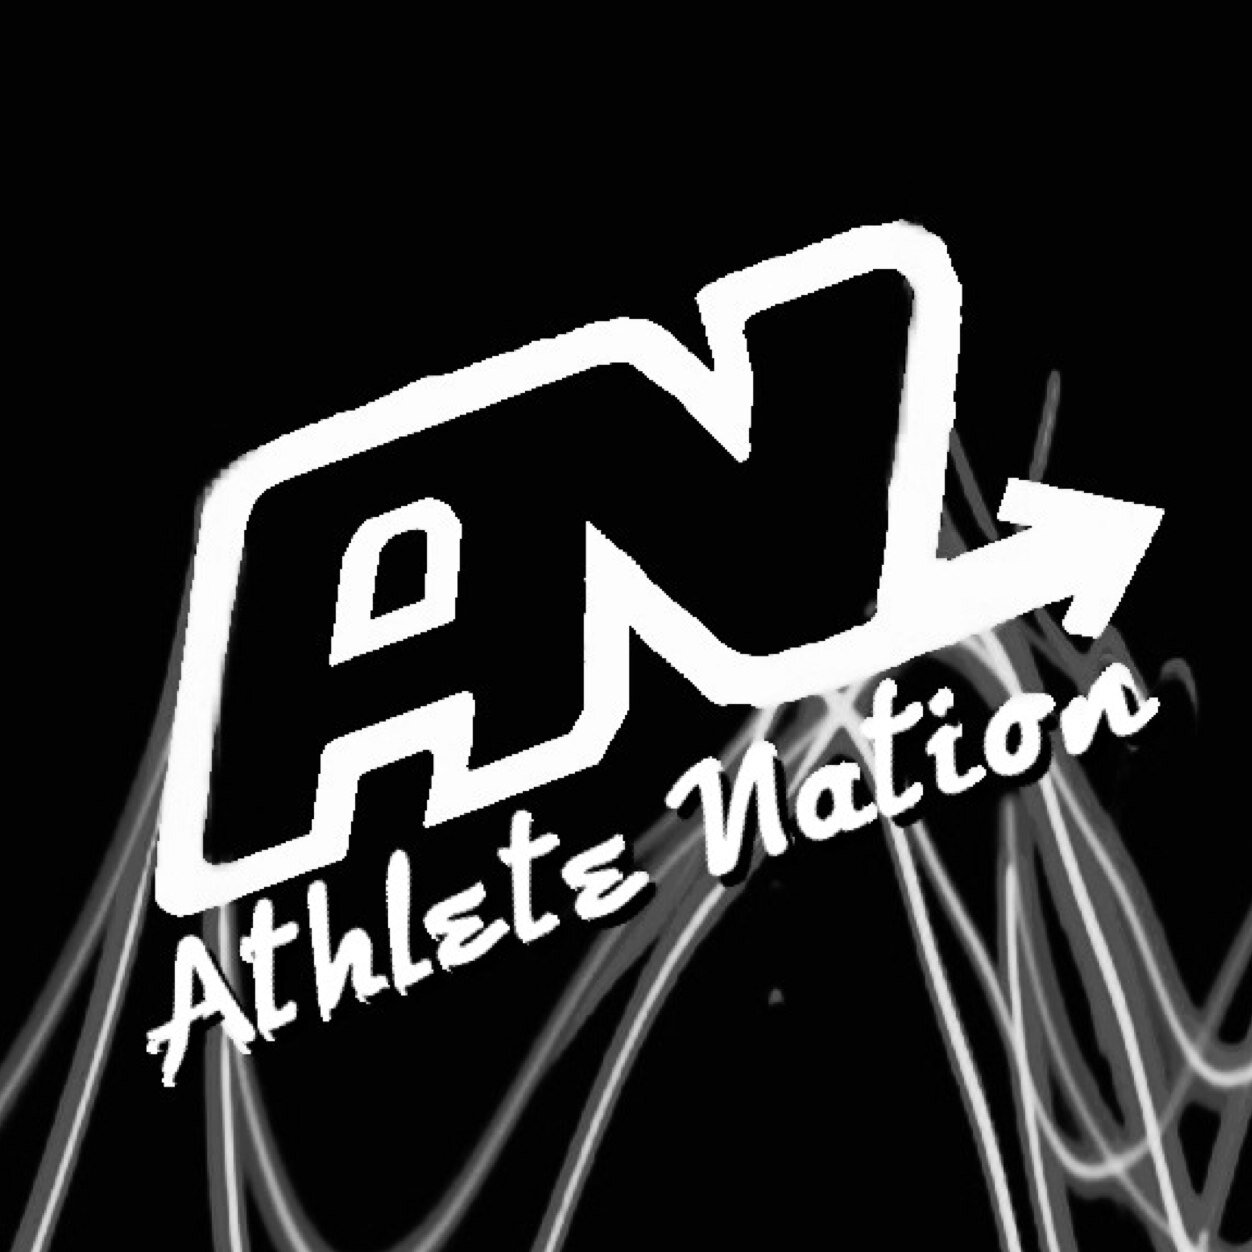 athletenationco’s profile image